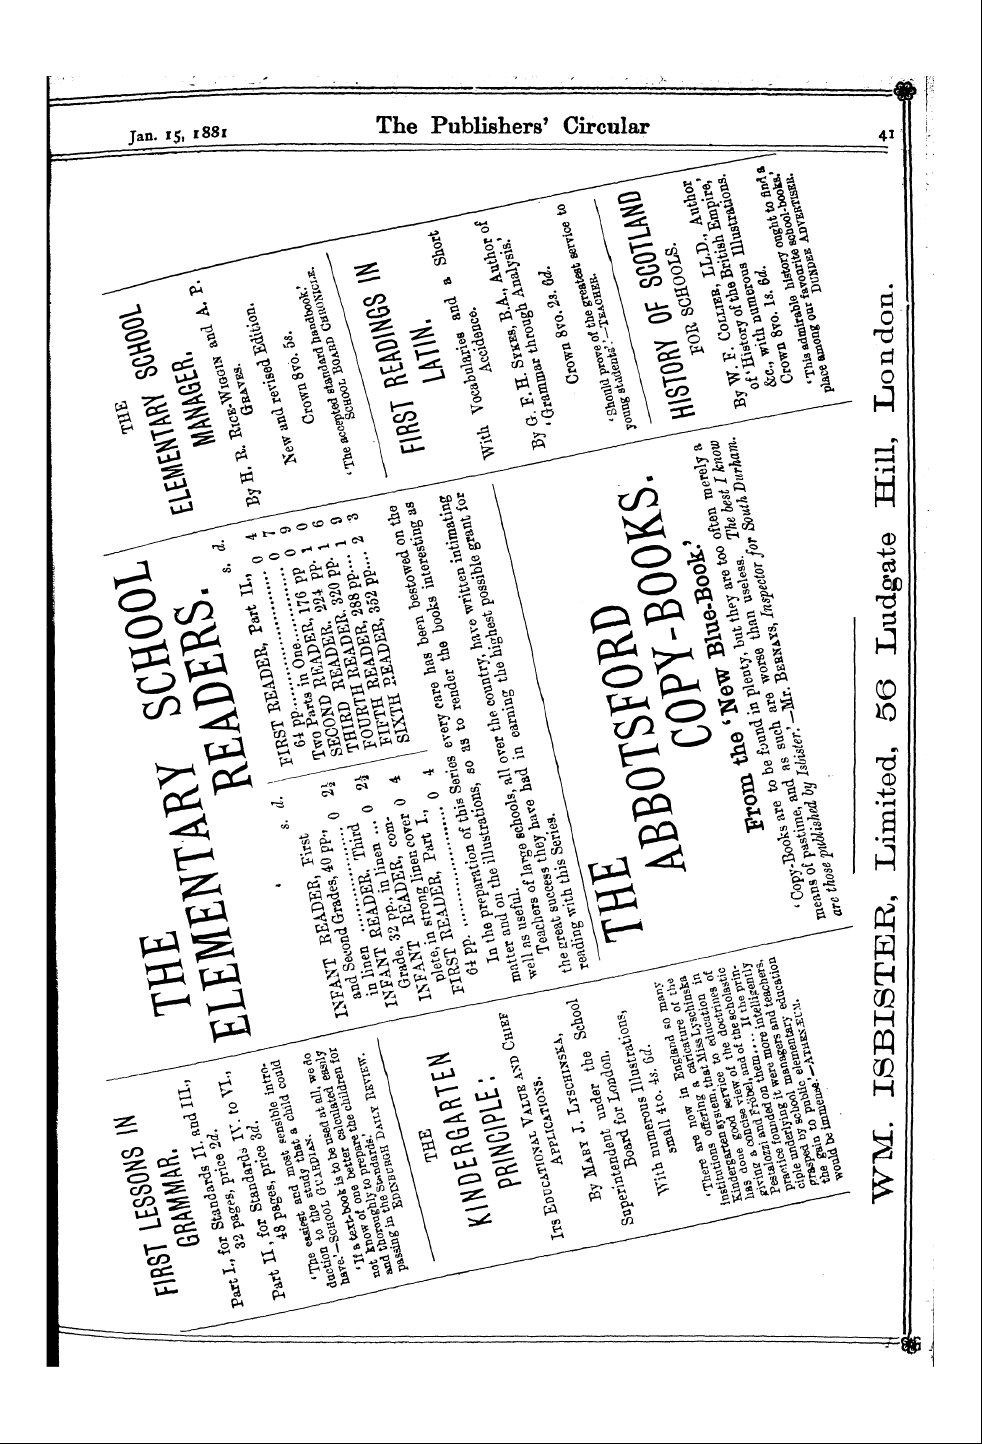 Publishers’ Circular (1880-1890): jS F Y, 1st edition: 41